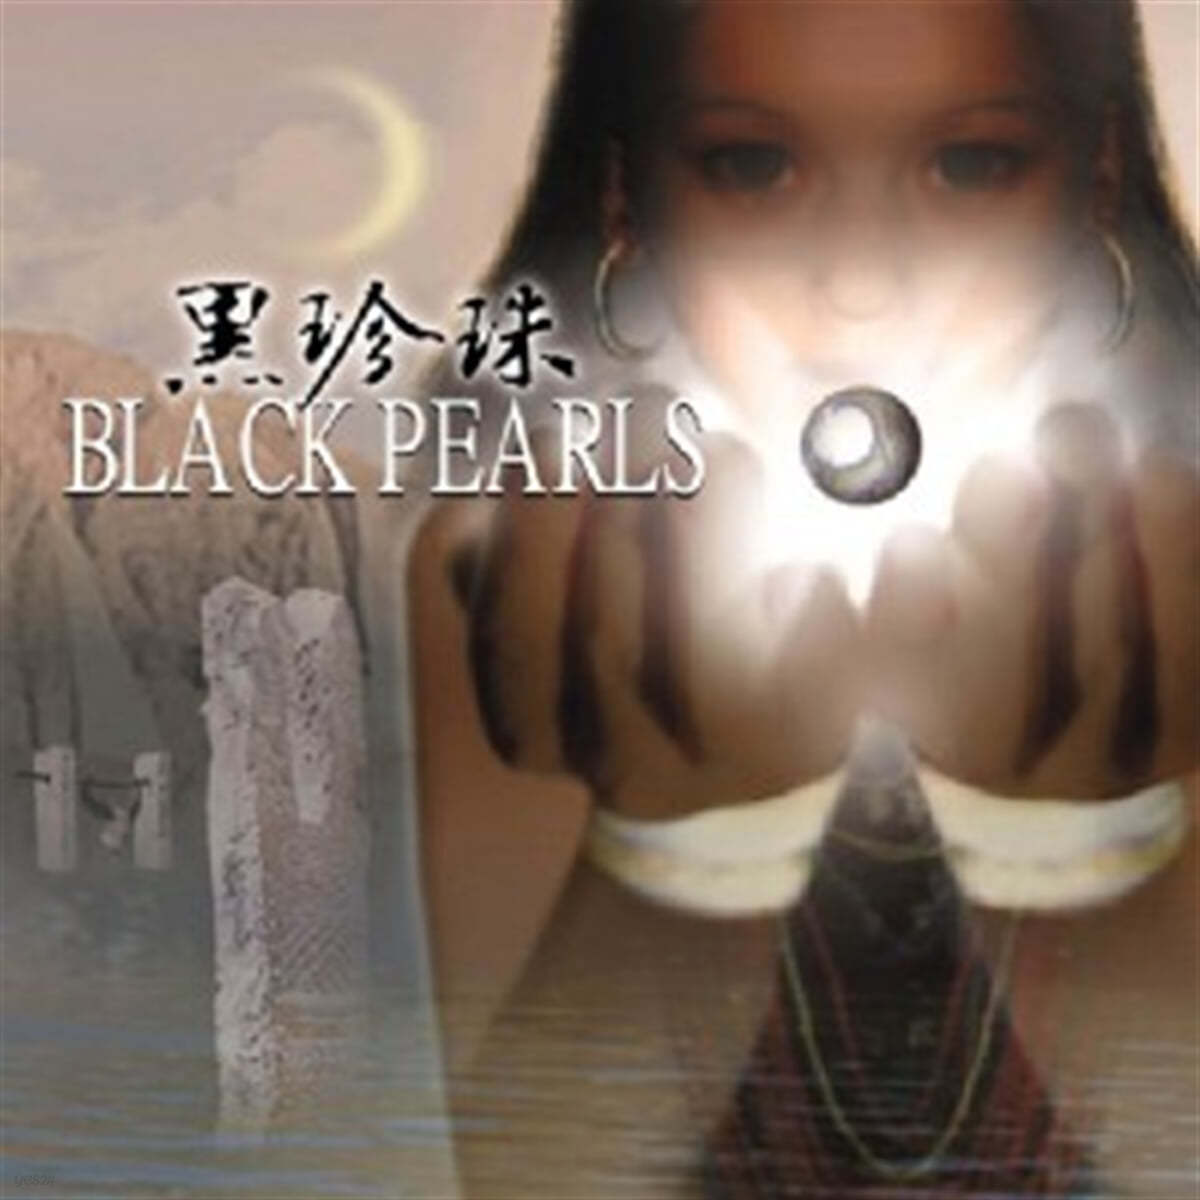 Liu Jian / Wang Xu-Dong (류지안 / 왕쑤동) - Black Pearls (黑珍珠) 